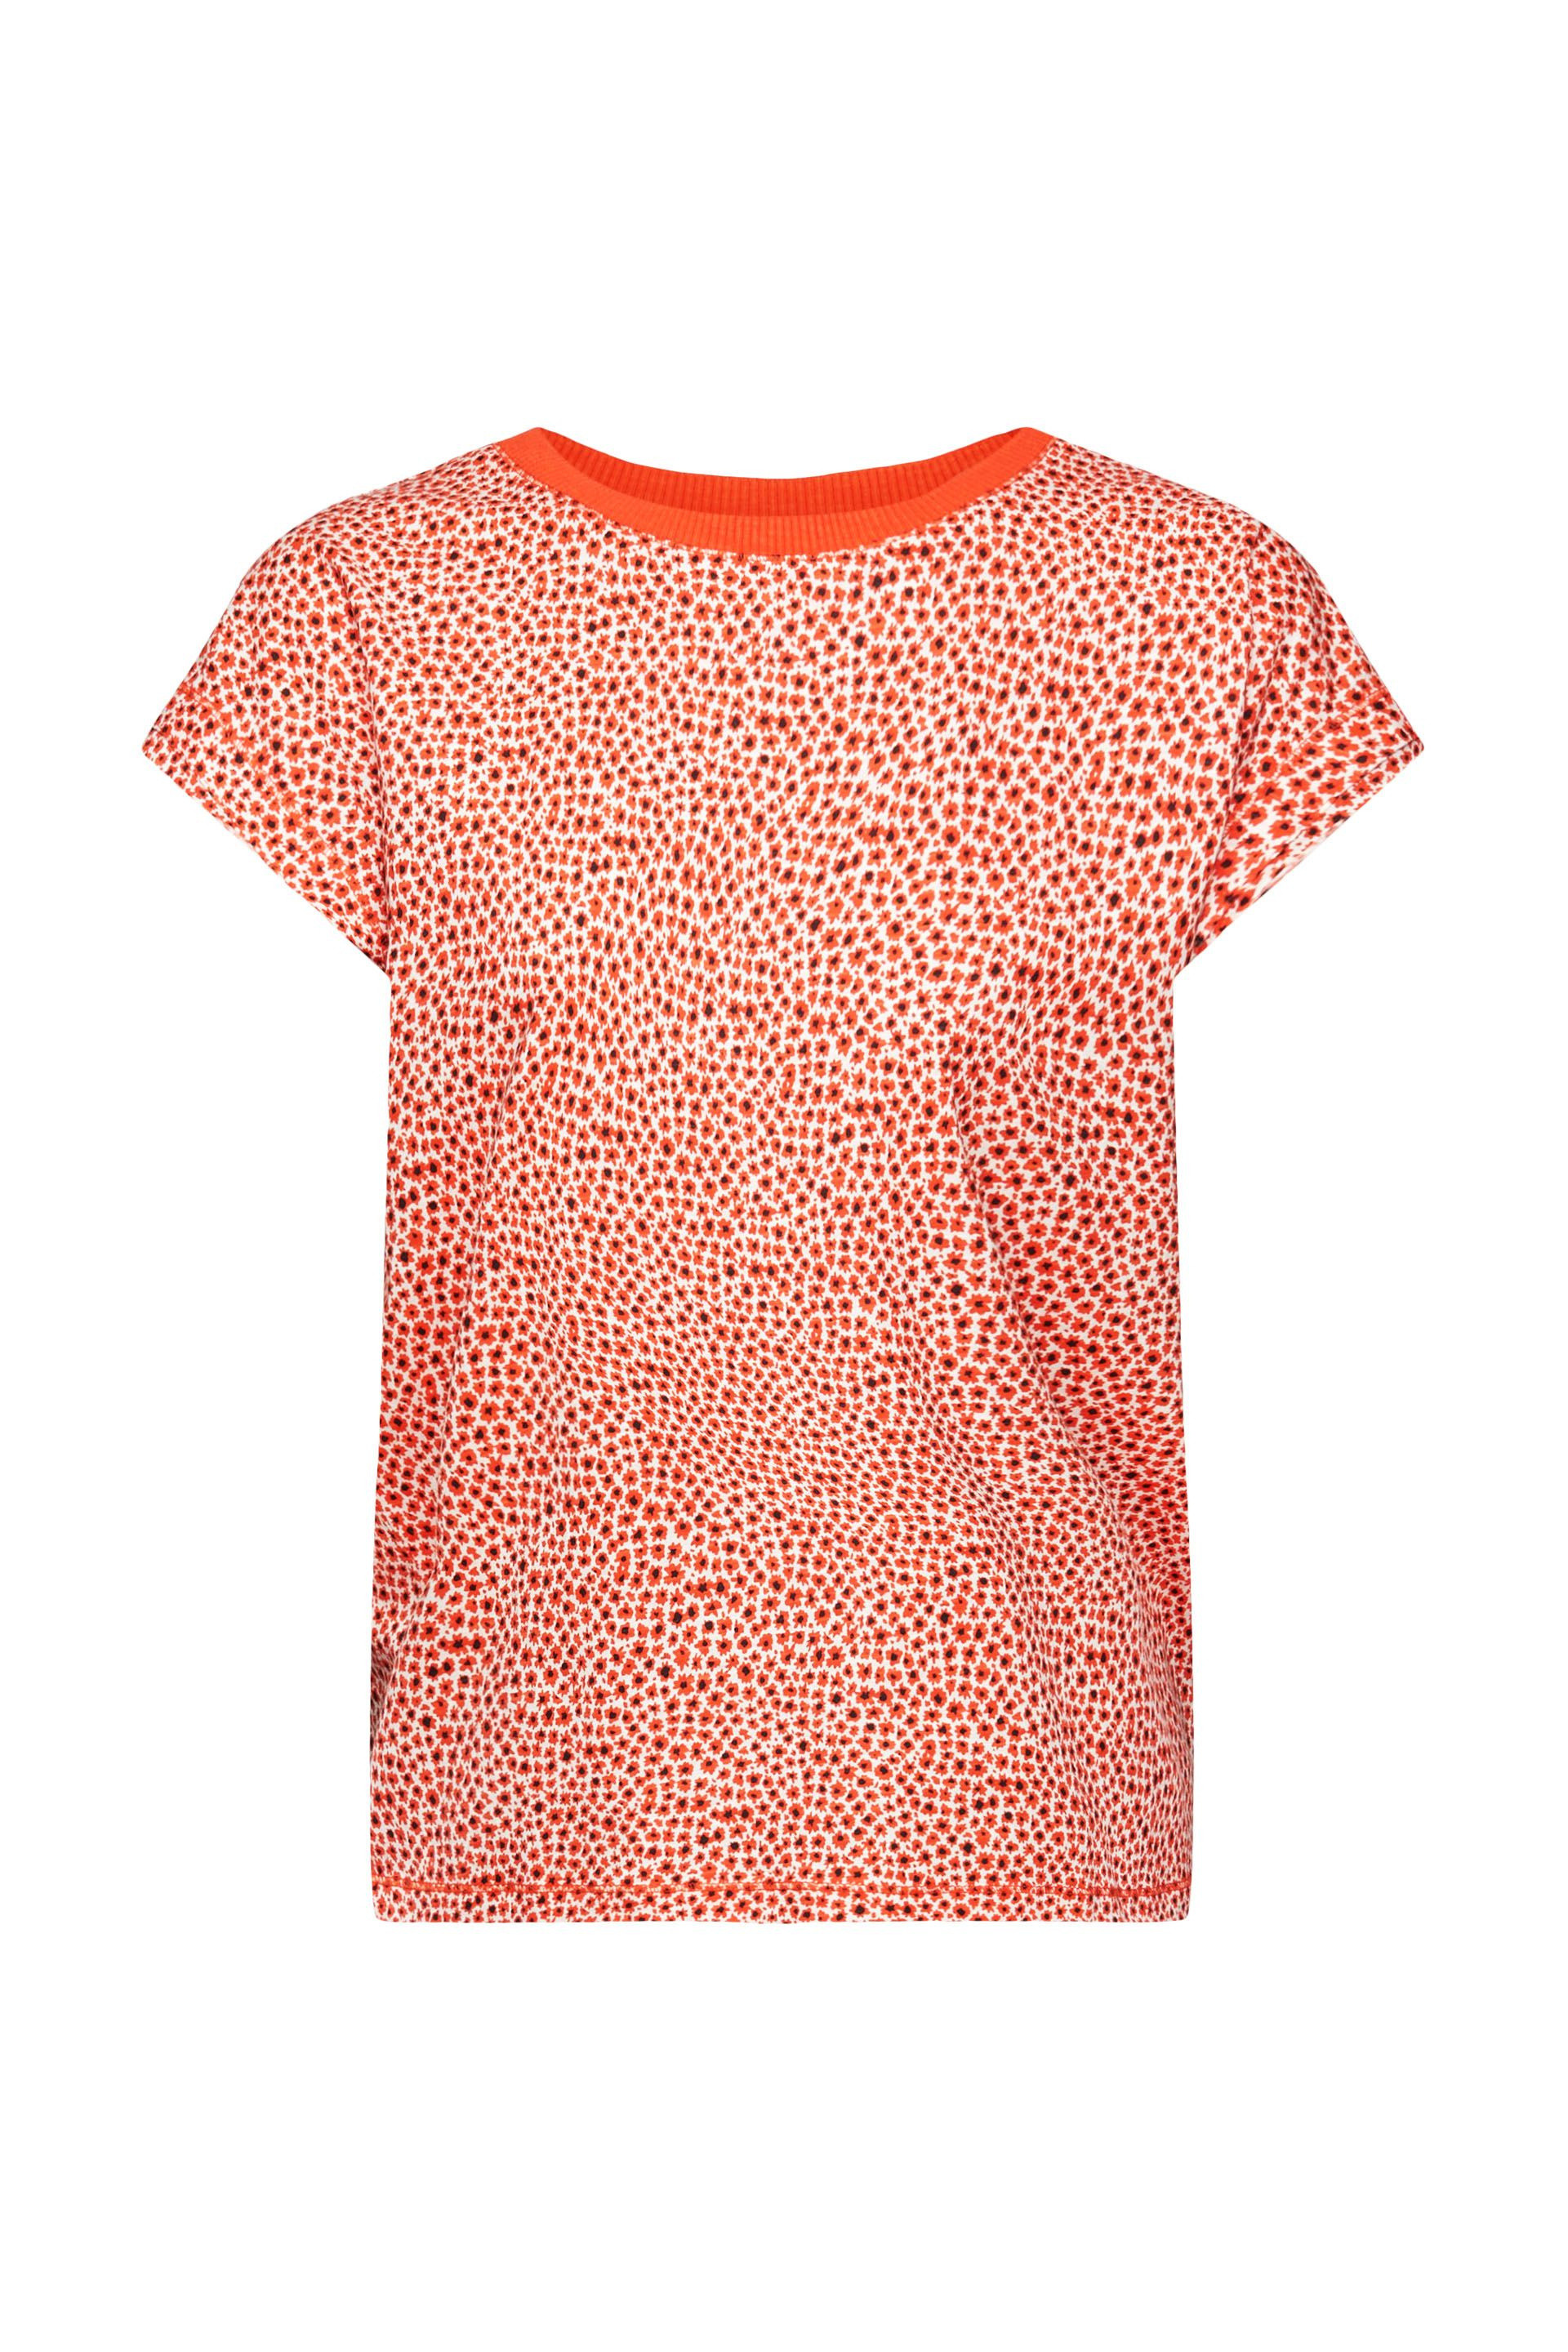 Esprit - T-shirt con motivo floreale all over, Arancione, large image number 0